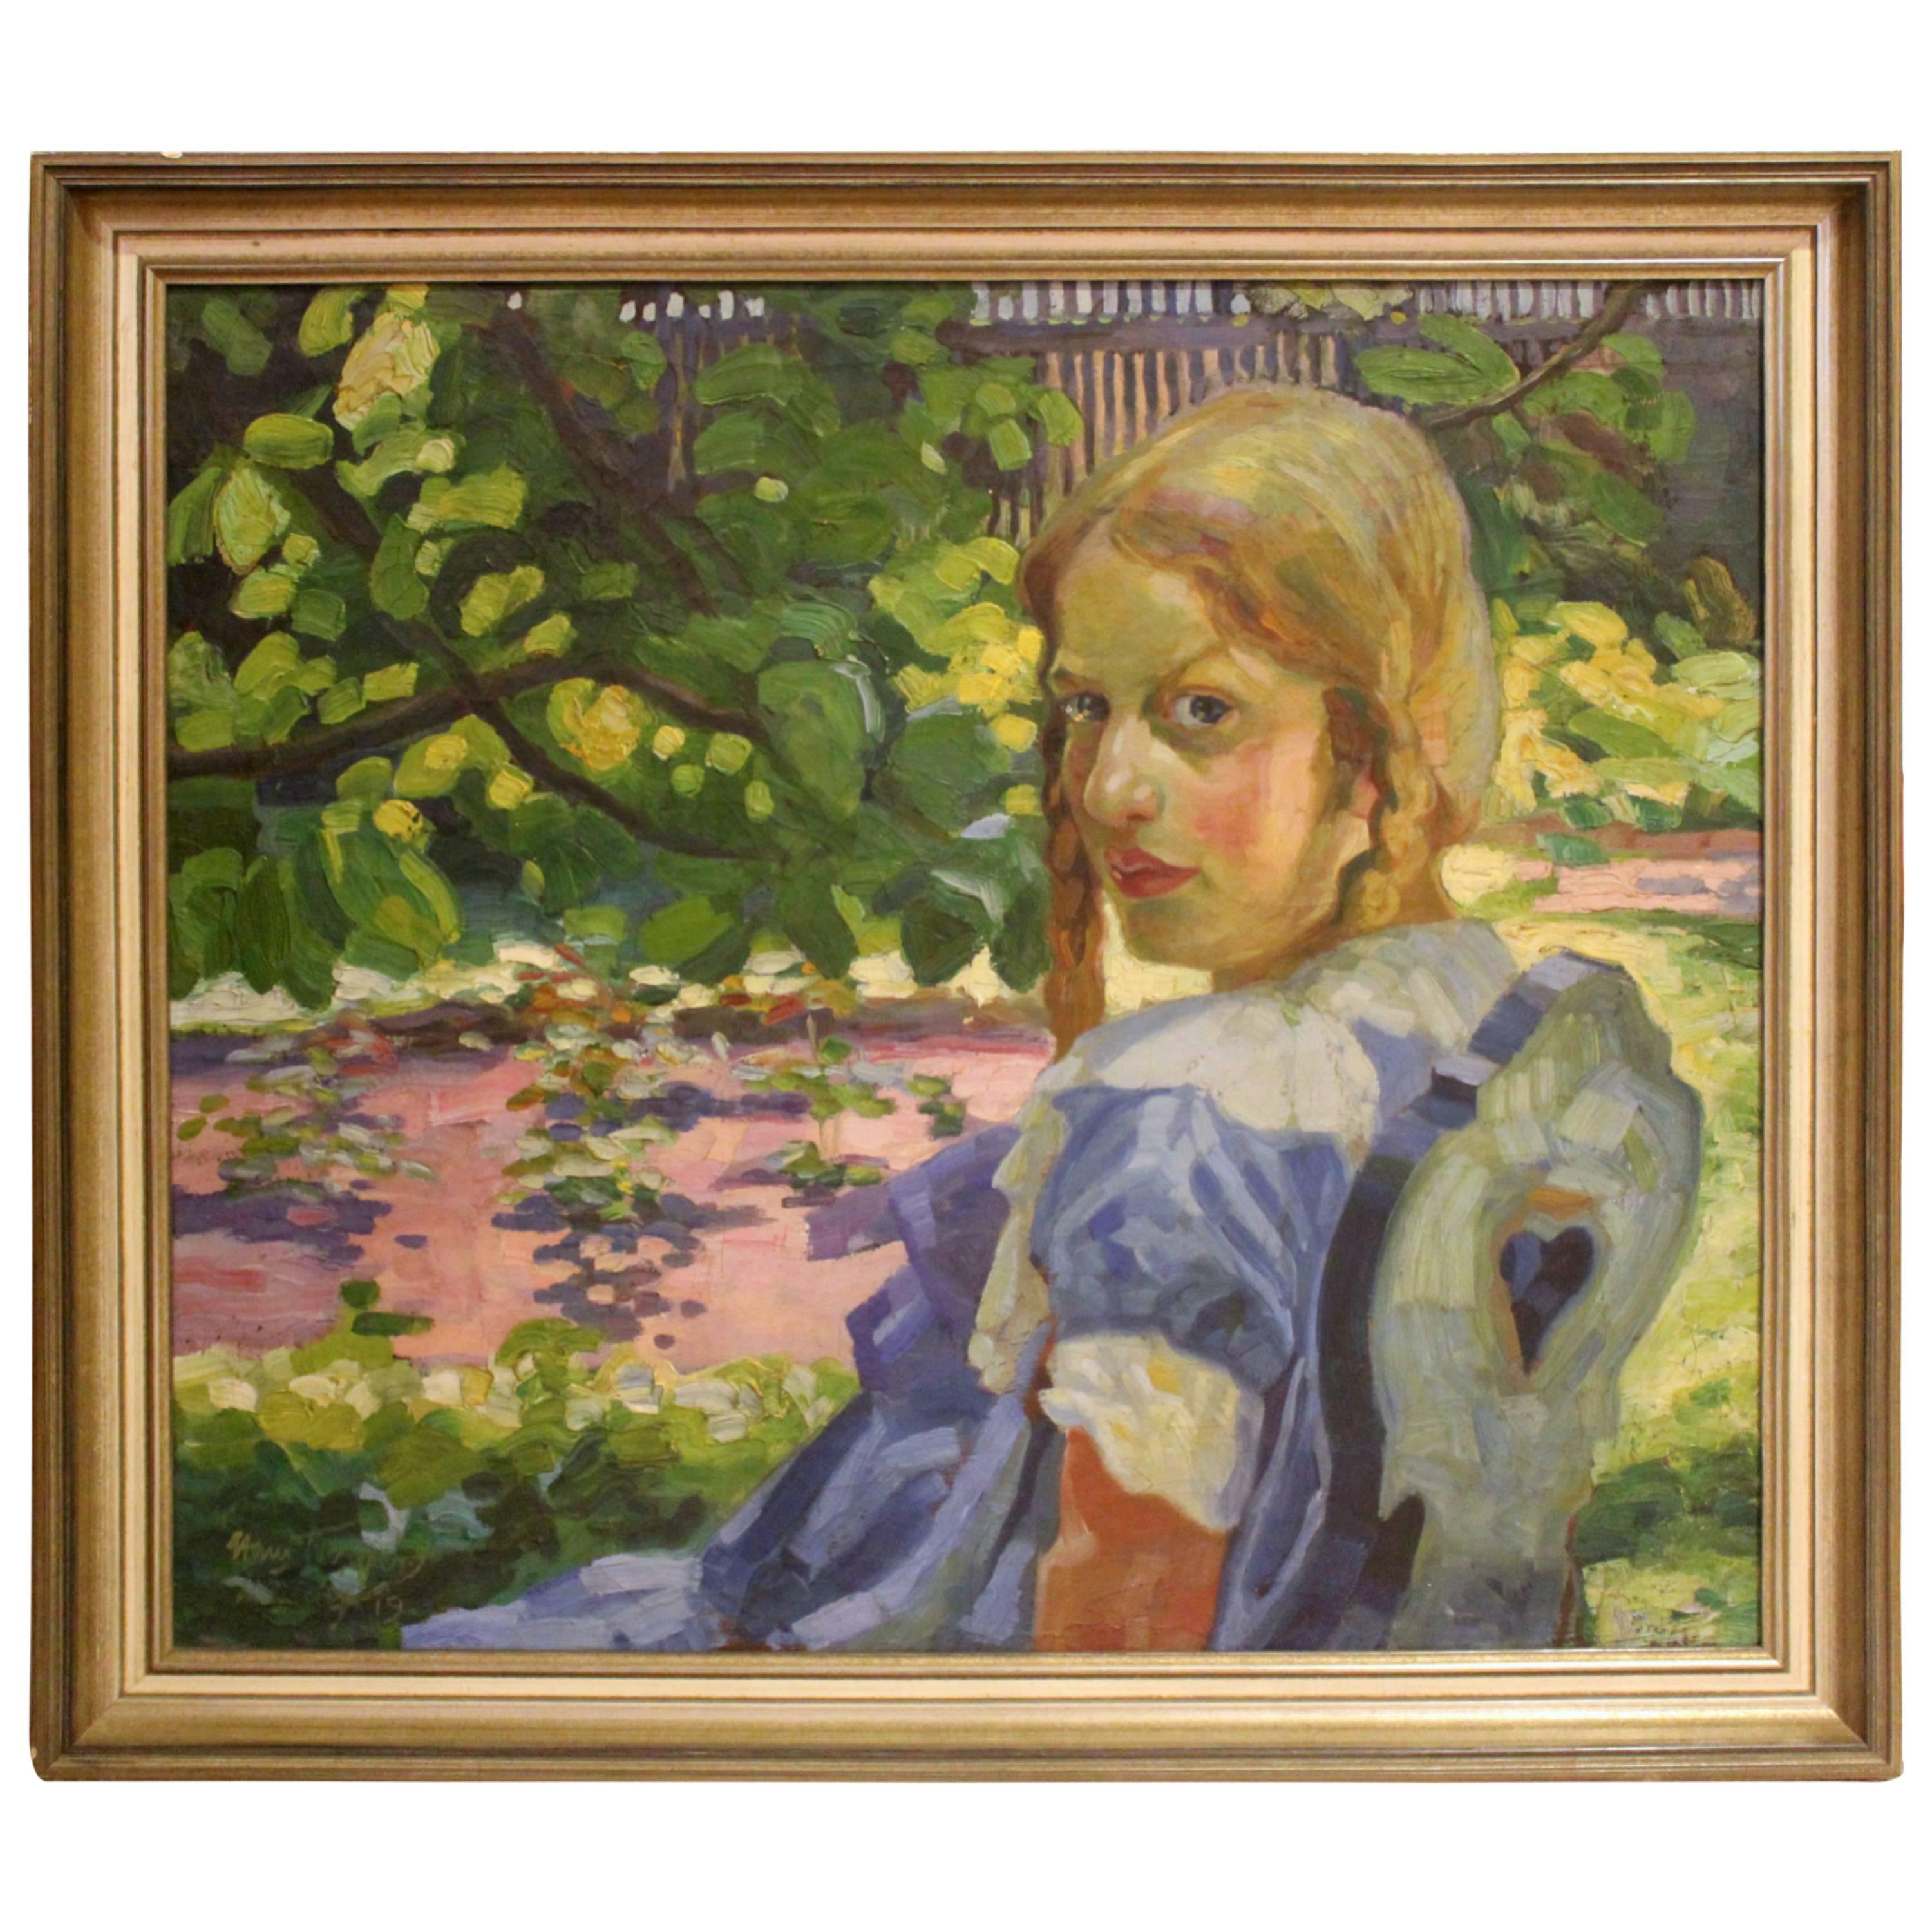 Portrait of a Girl Sitting in a Summer Garden